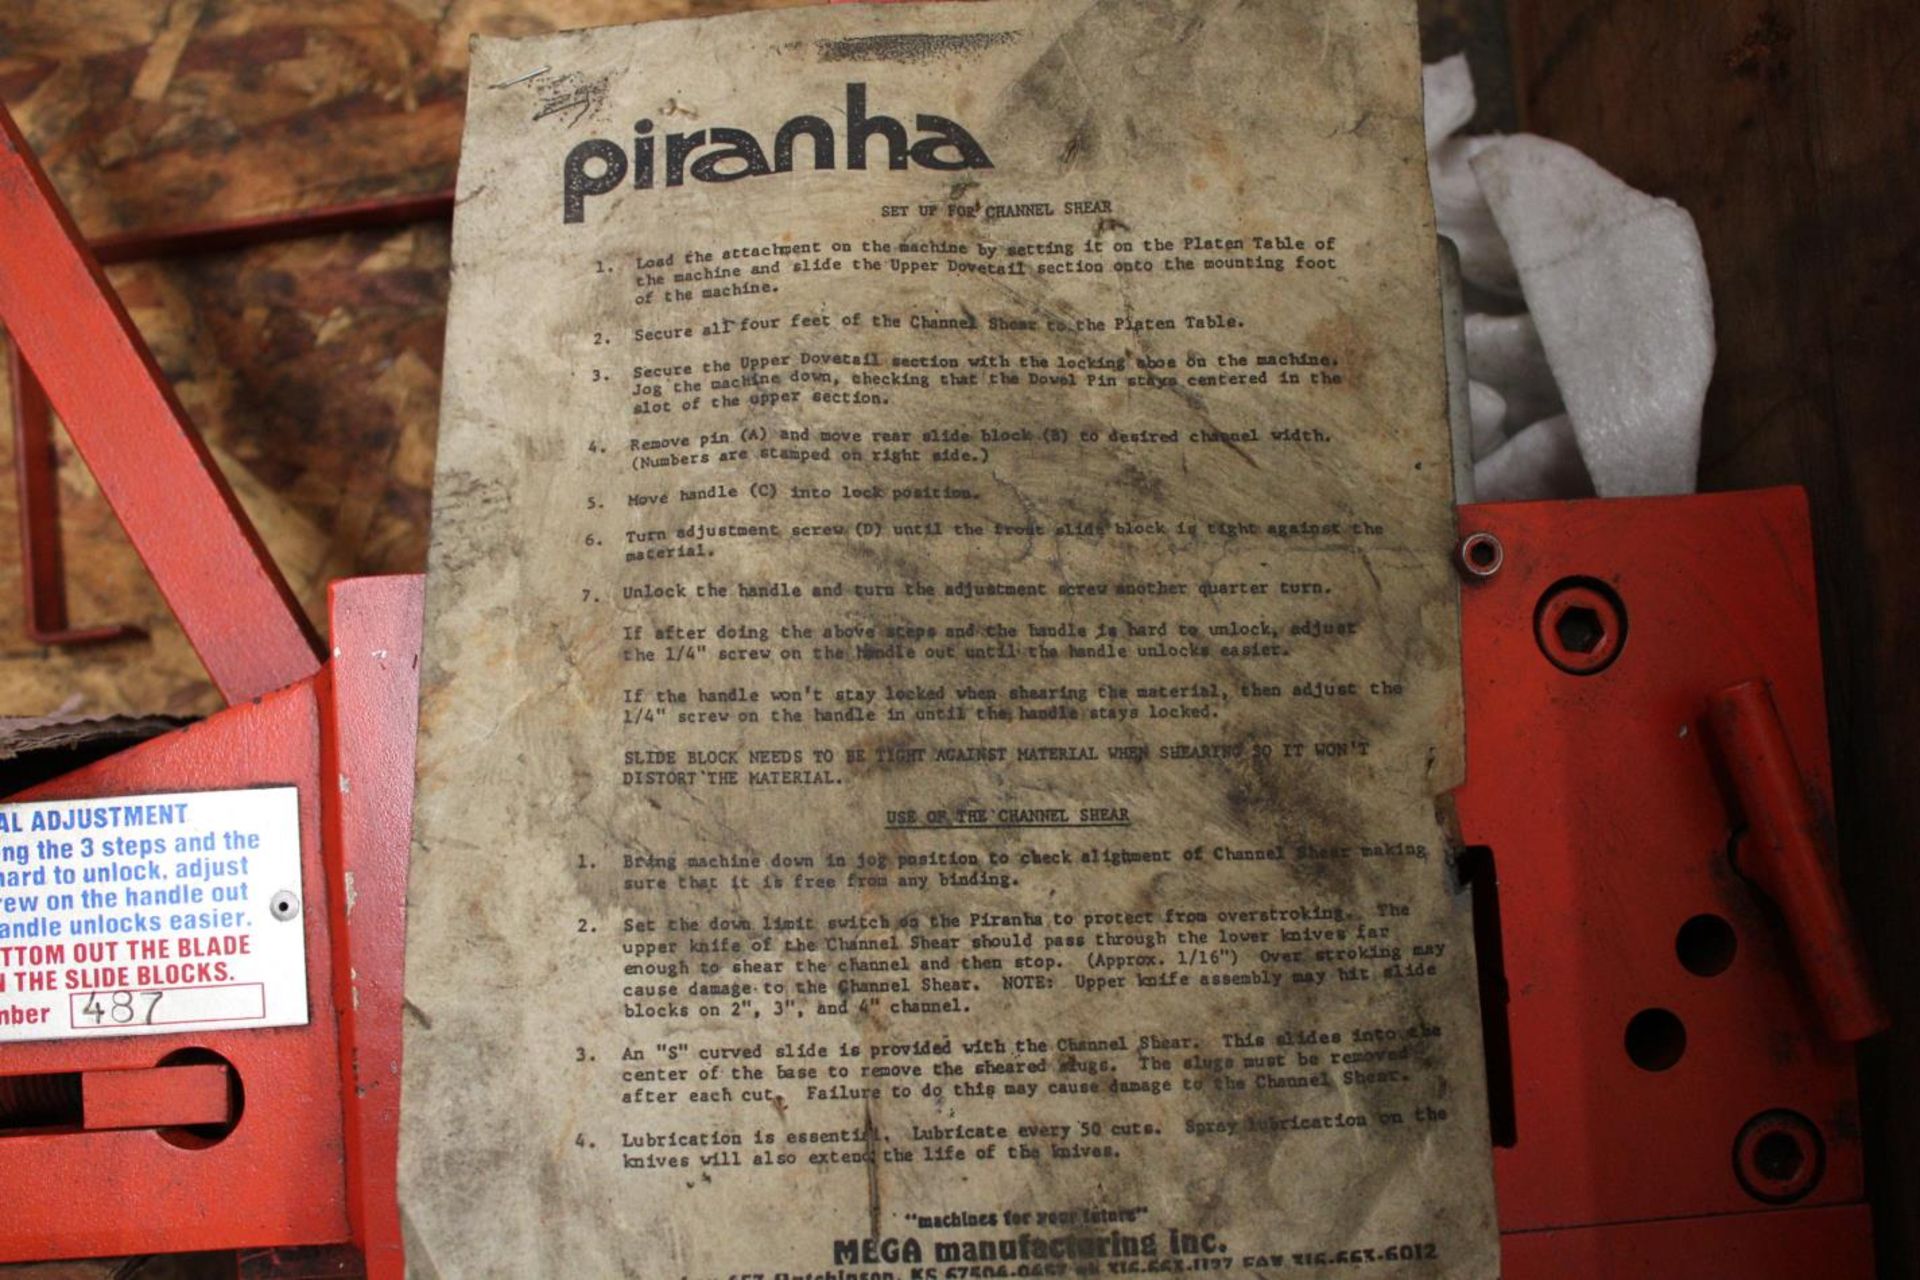 Piranha Channel Shear - Image 3 of 4